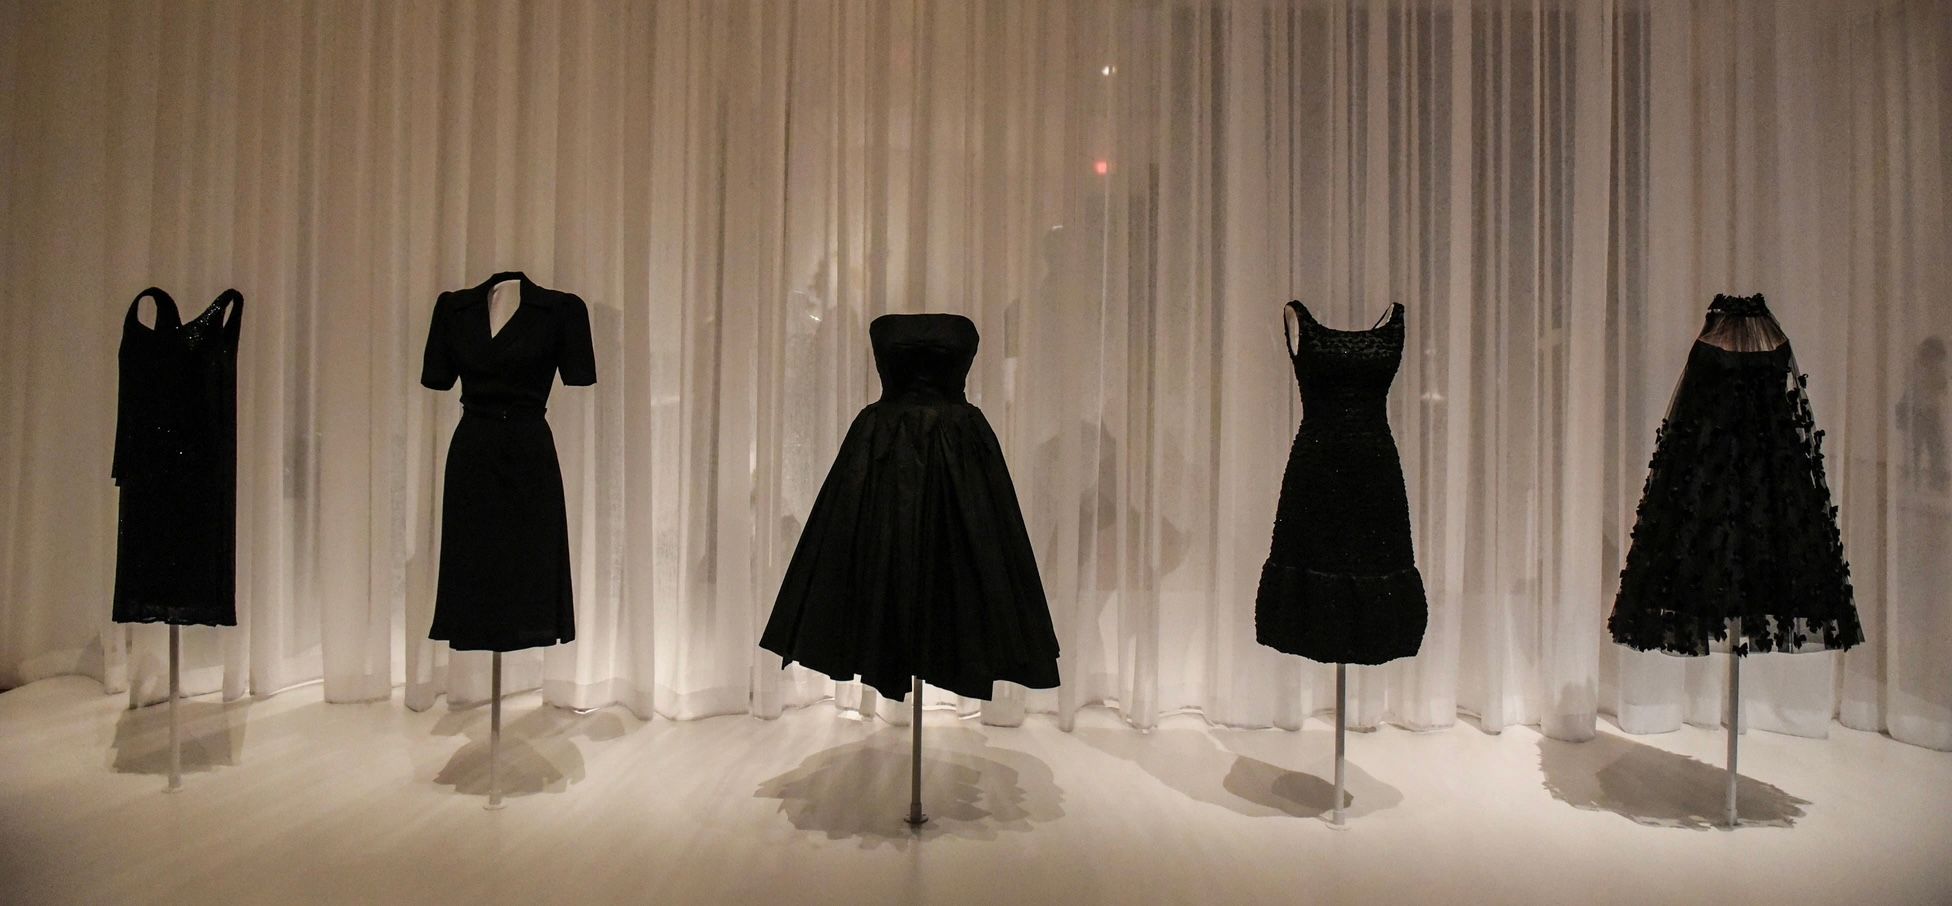 THE ORIGIN OF THE LITTLE BLACK DRESS